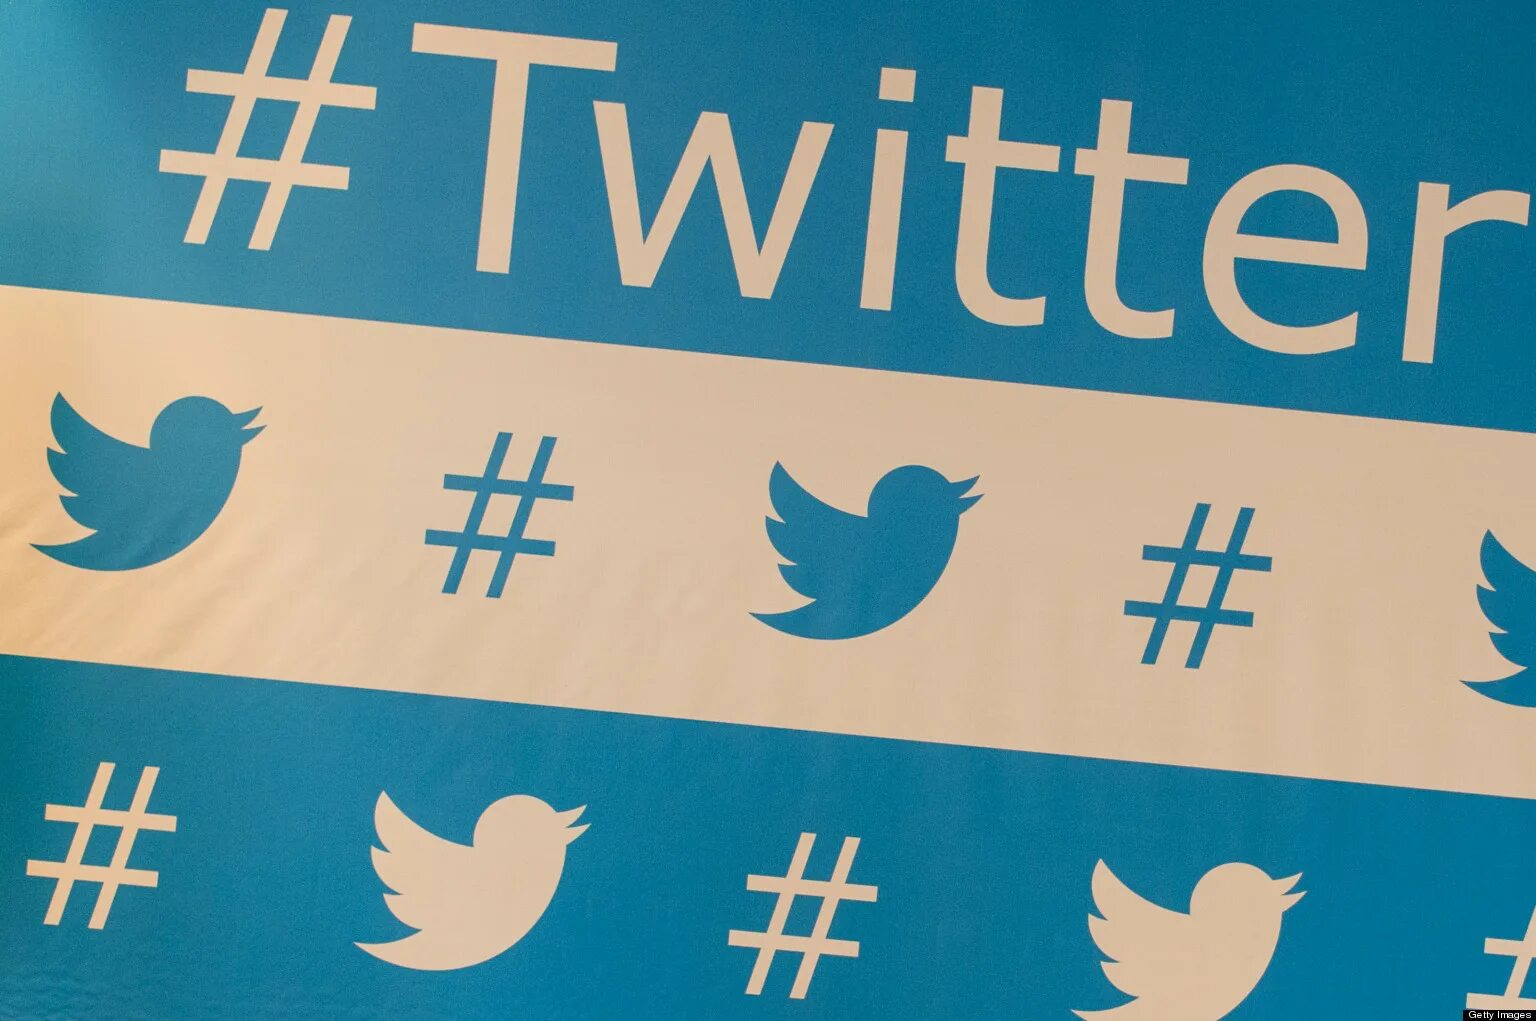 Твиттер. Логотип твиттера. «Twitter» — социальная сеть. Twitter картинки.